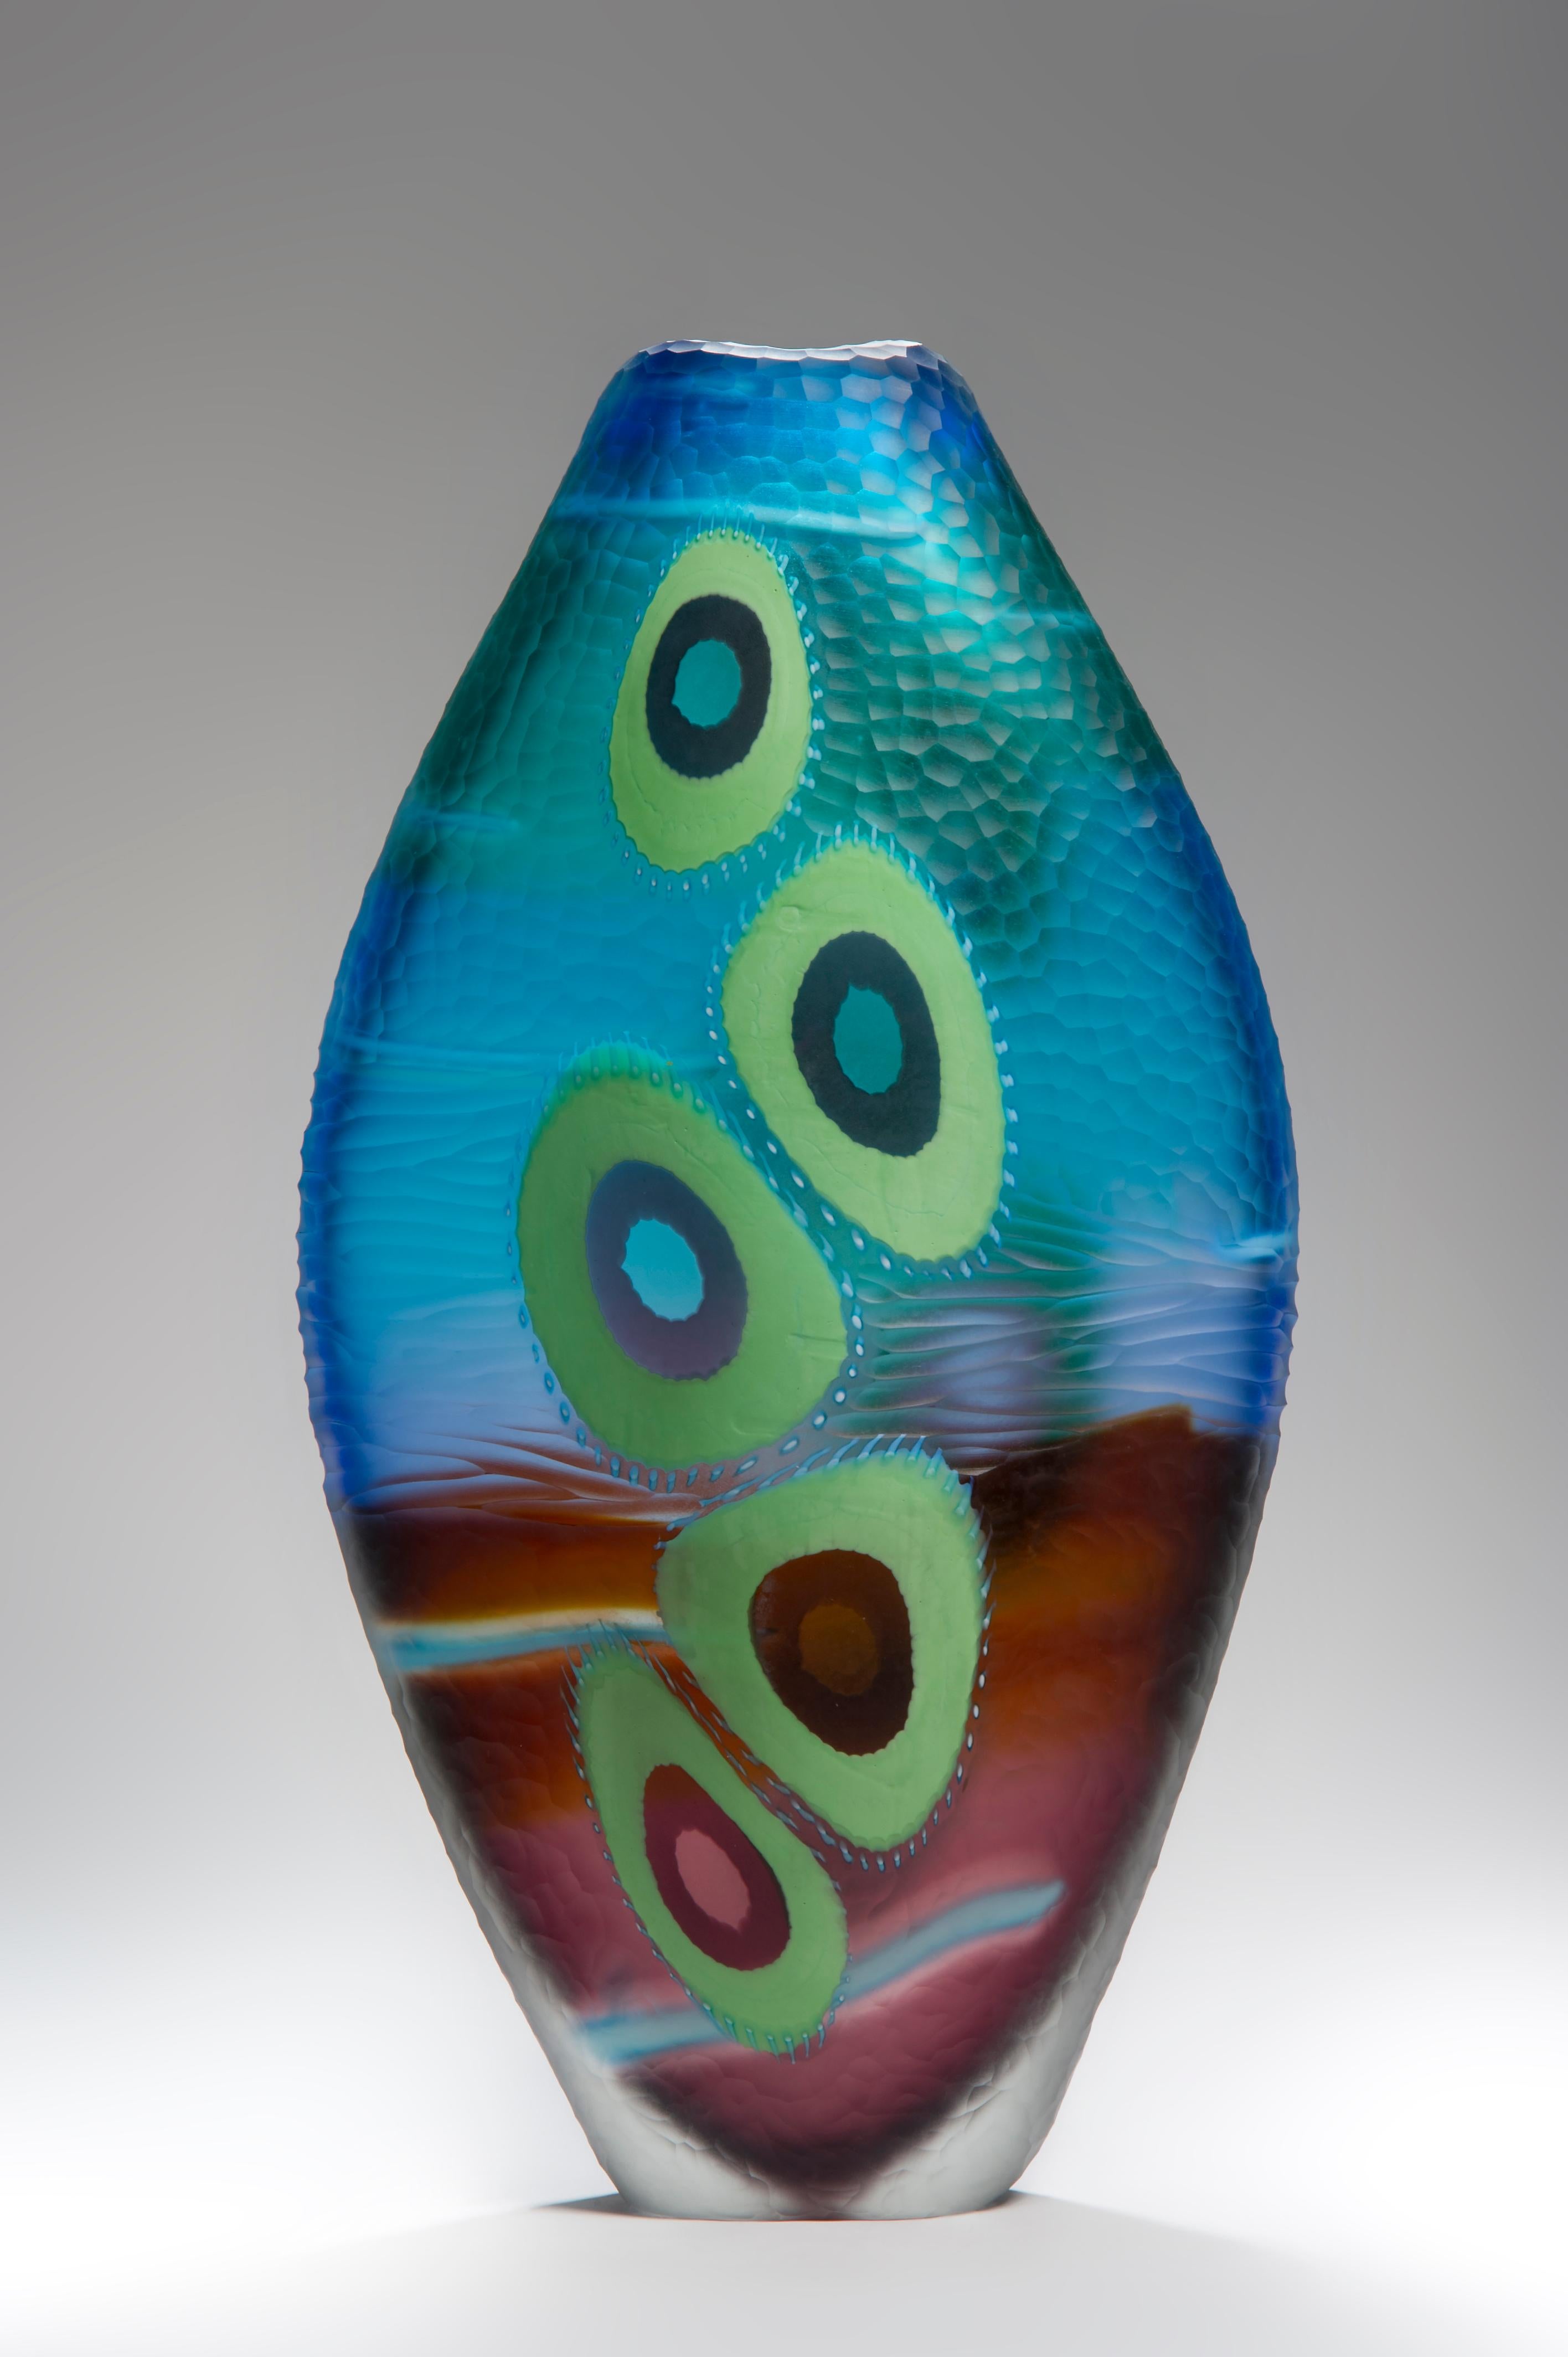 Art Glass Evviva III, a mixed coloured sculptural glass vase by Marco & Mattia Salvadore